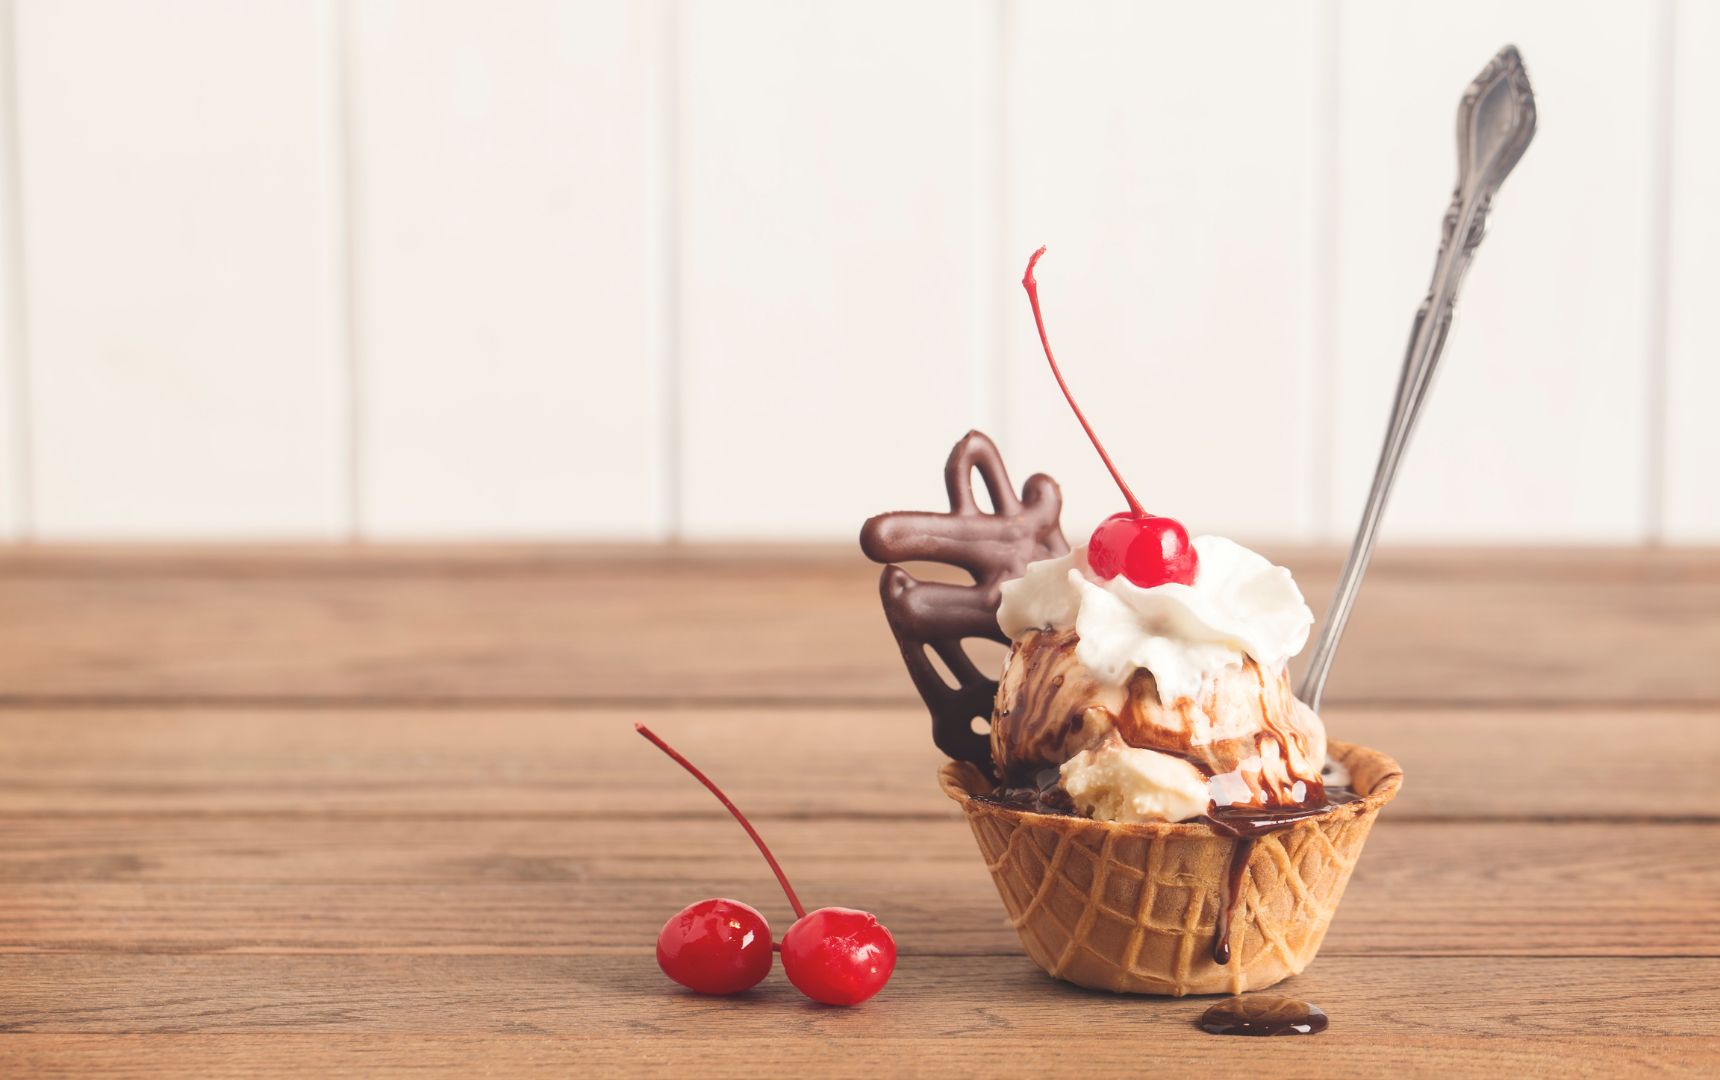 Ice Cream Sundae With A/B Testing Cherry on Top